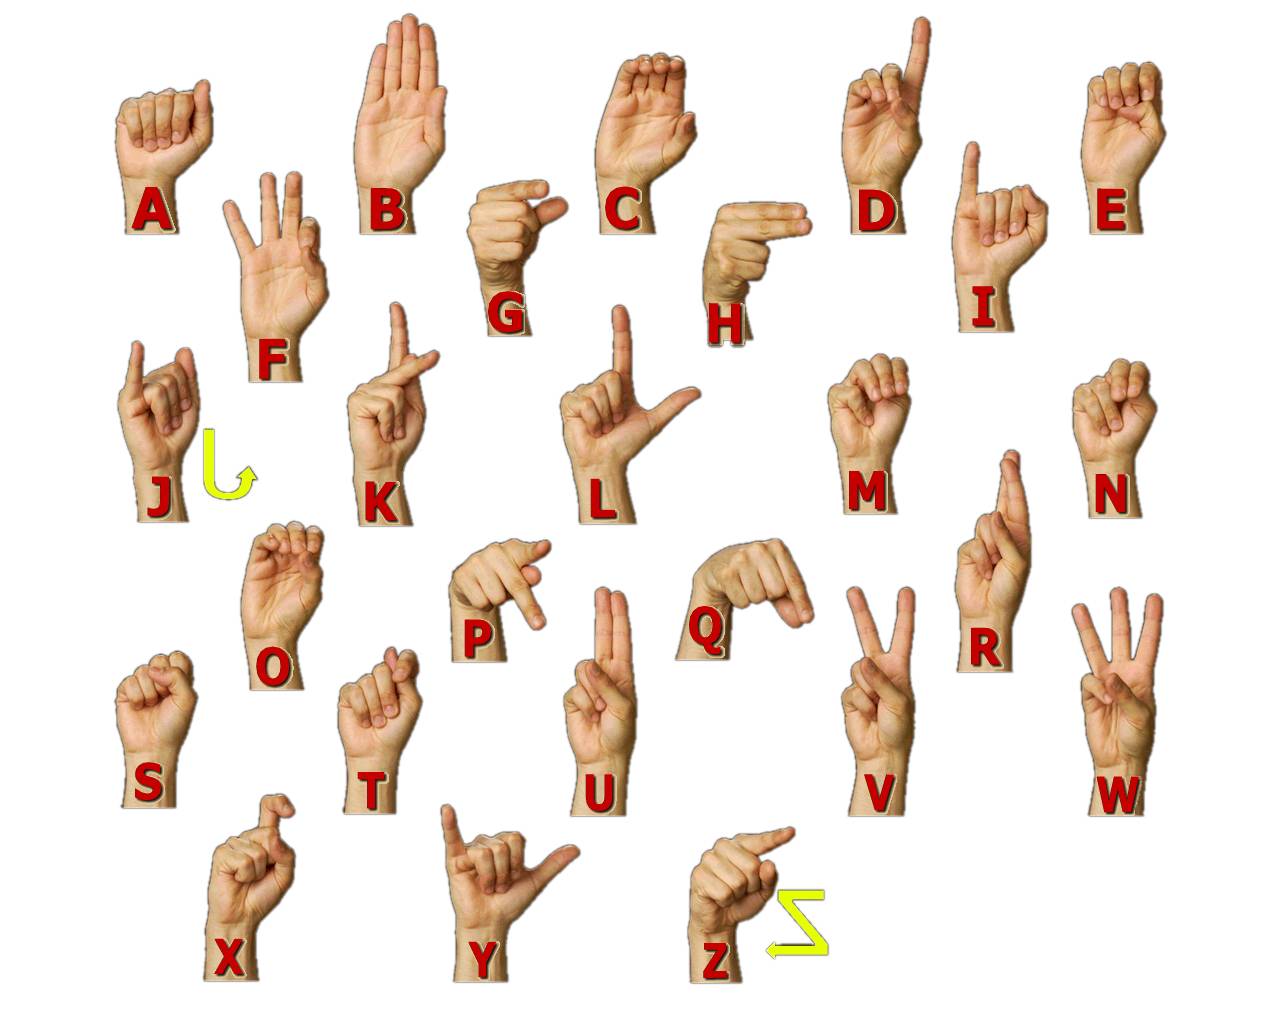 Belajar bahasa isyarat tangan malaysia